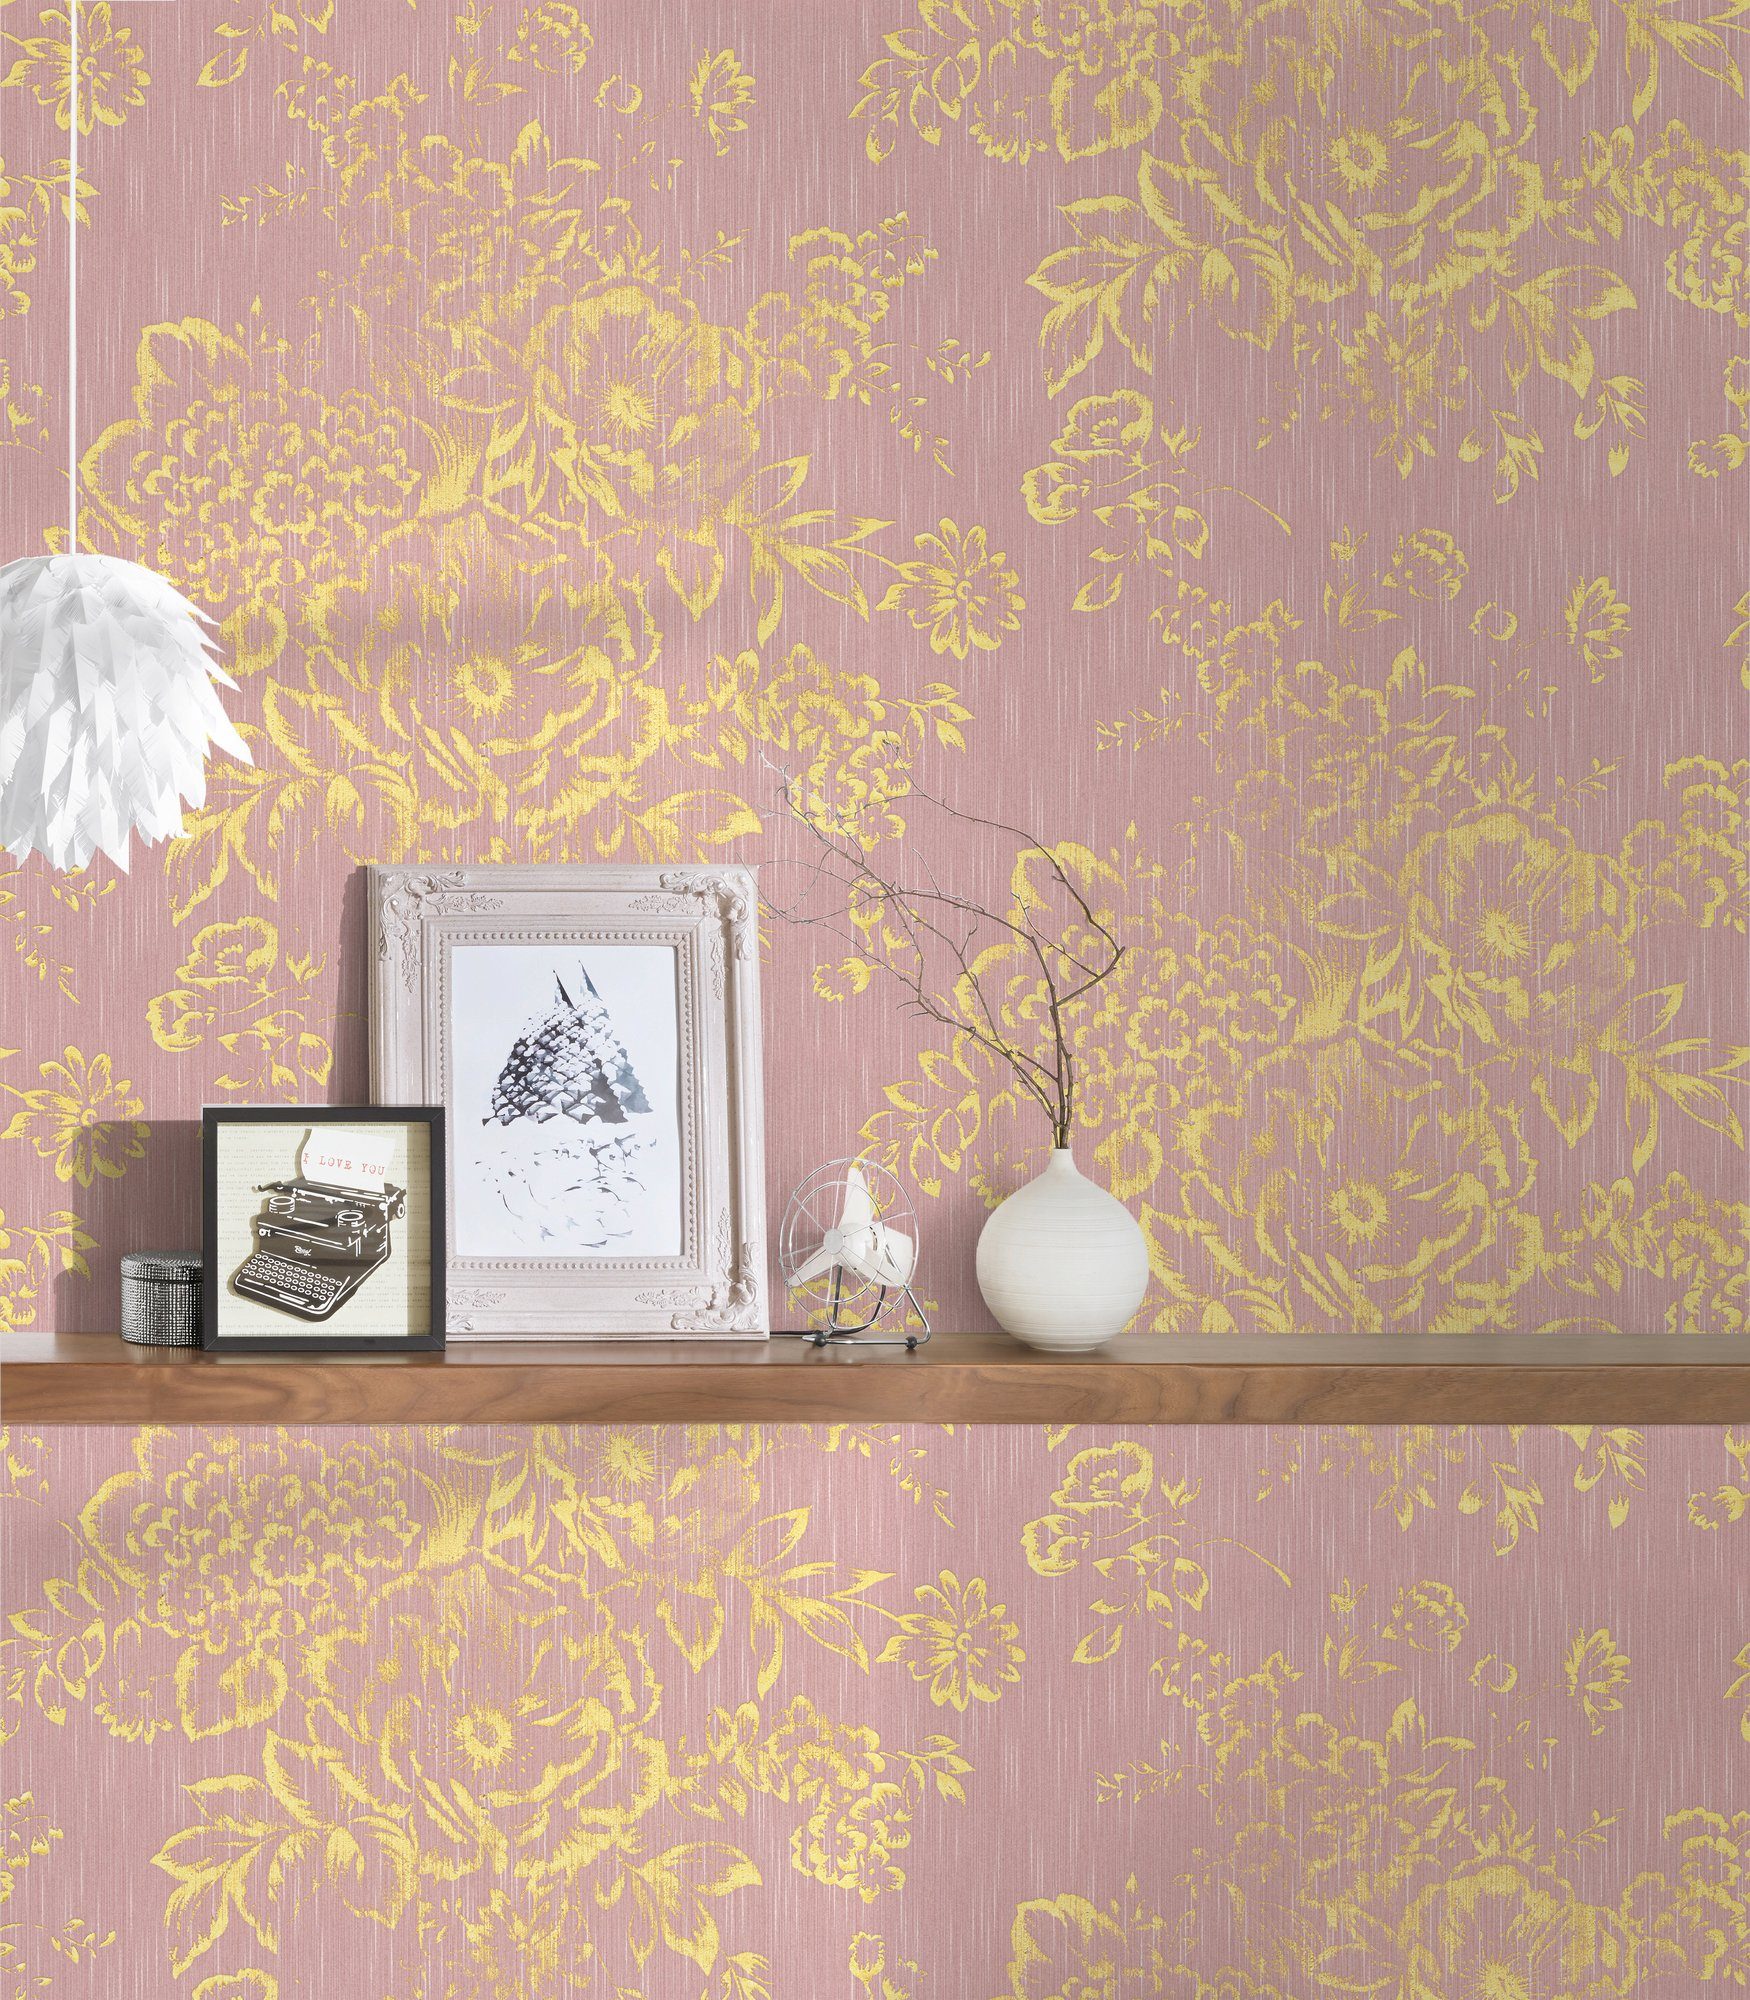 Architects floral, Barocktapete glänzend, Silk, A.S. gold/rosa Metallic samtig, Création Paper matt, Blumen Tapete Textiltapete